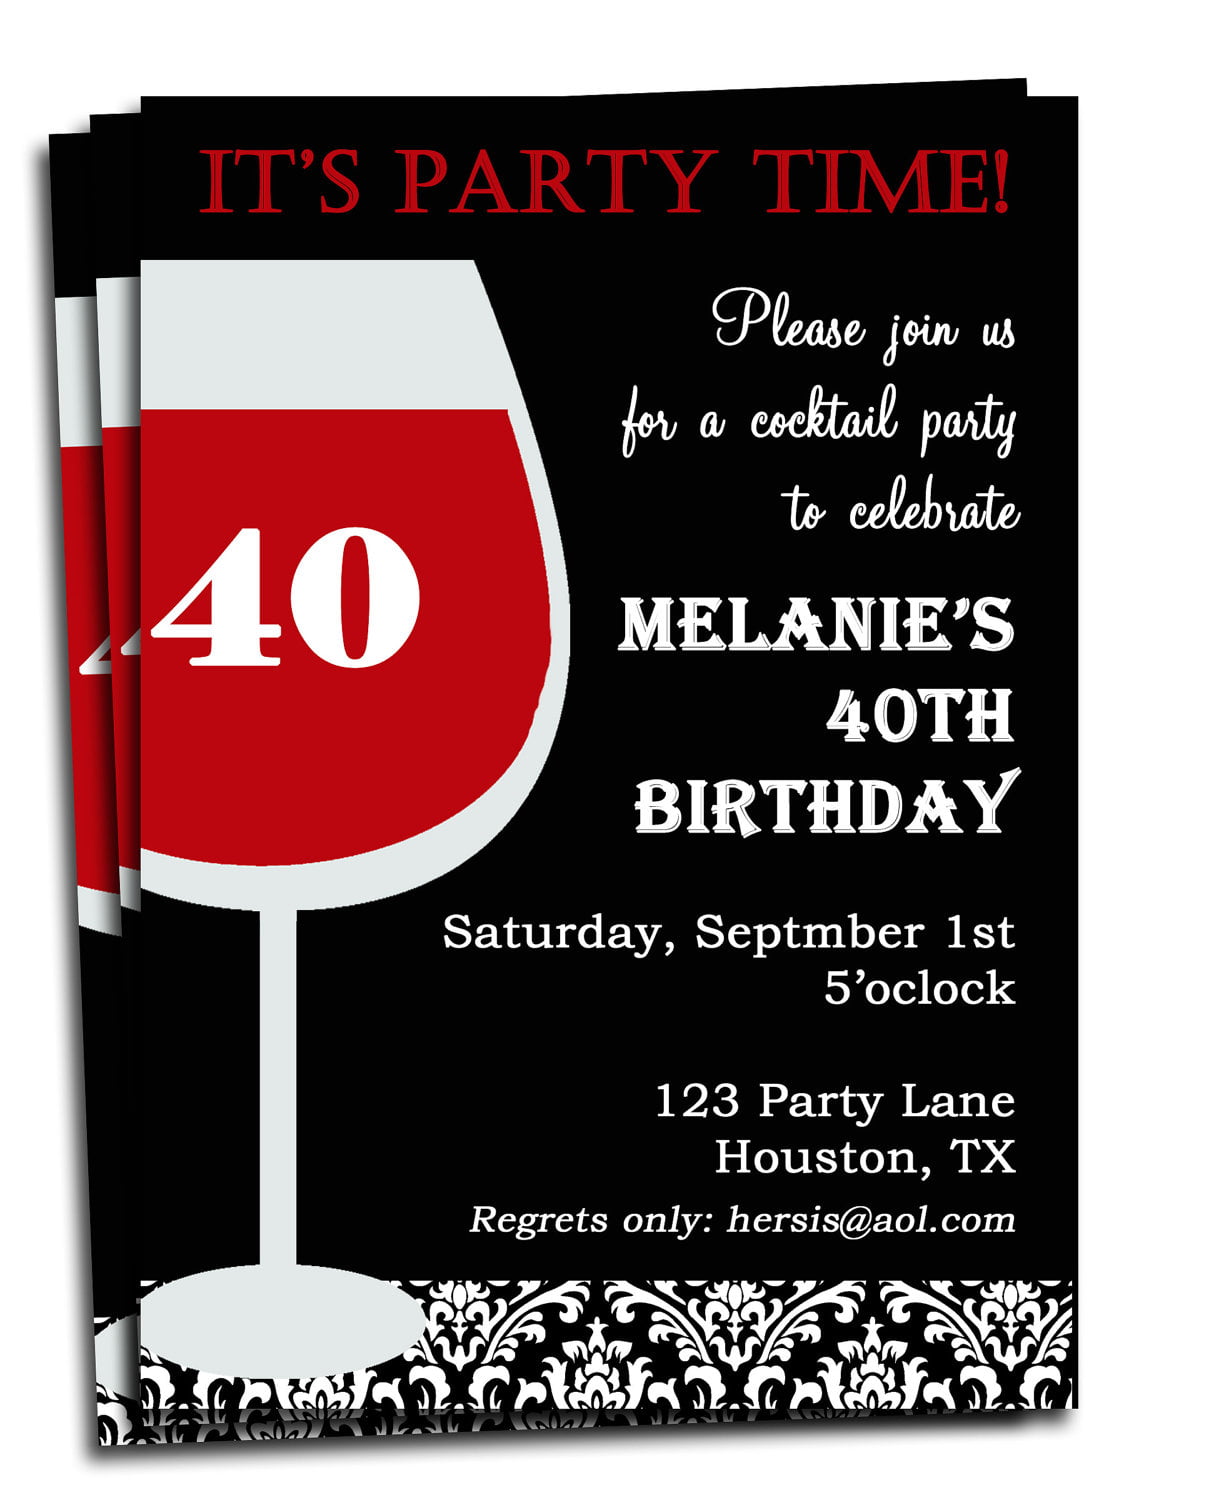 FREE Printable Personalized Birthday Invitations for Adults | FREE Invitation Templates - Drevio